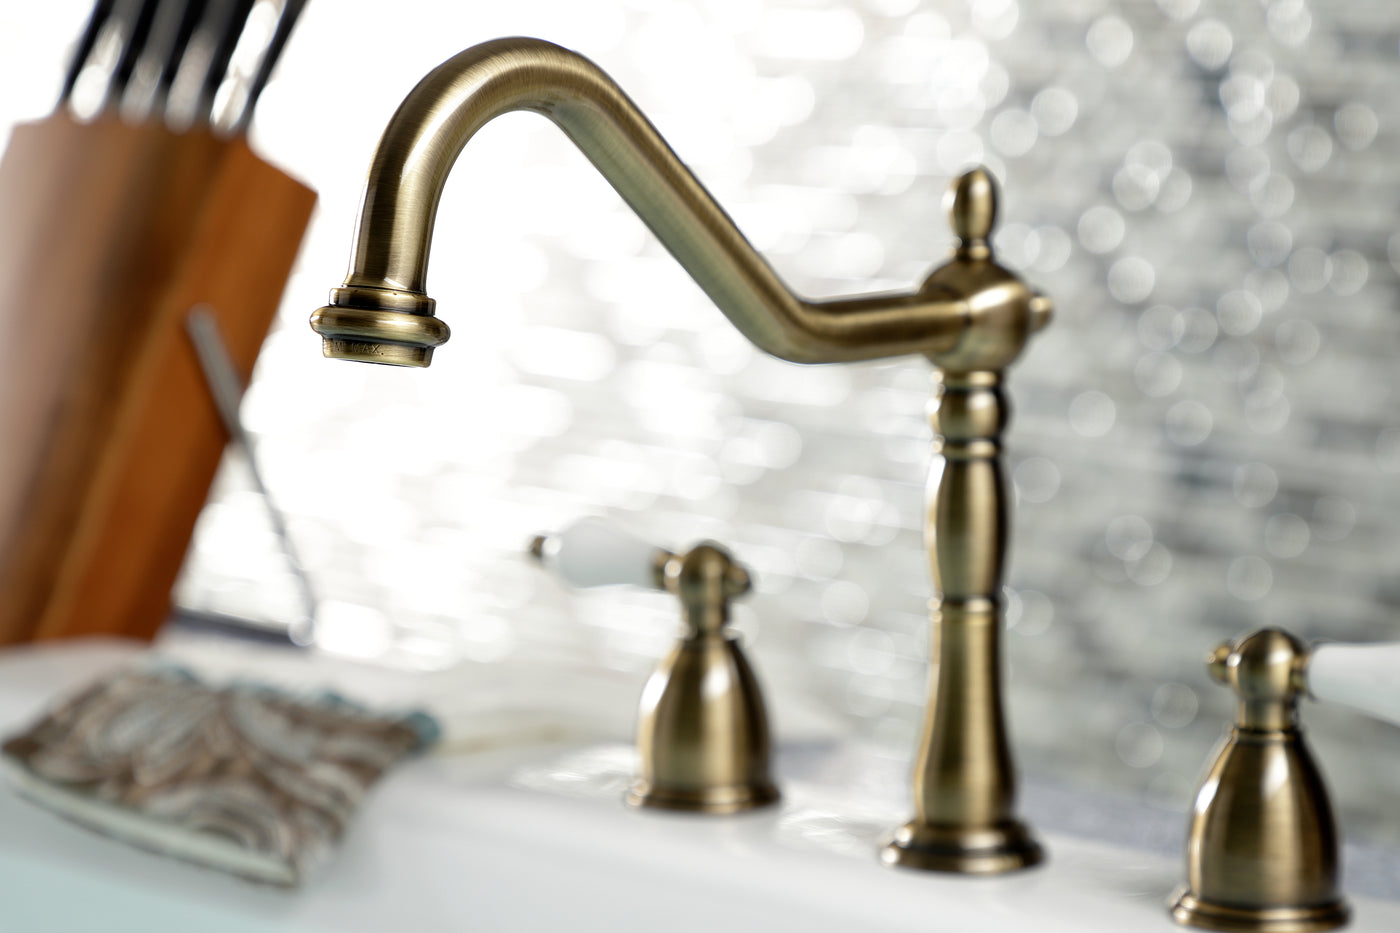 Elements of Design EB1793PLBS Widespread Kitchen Faucet with Brass Sprayer, Antique Brass